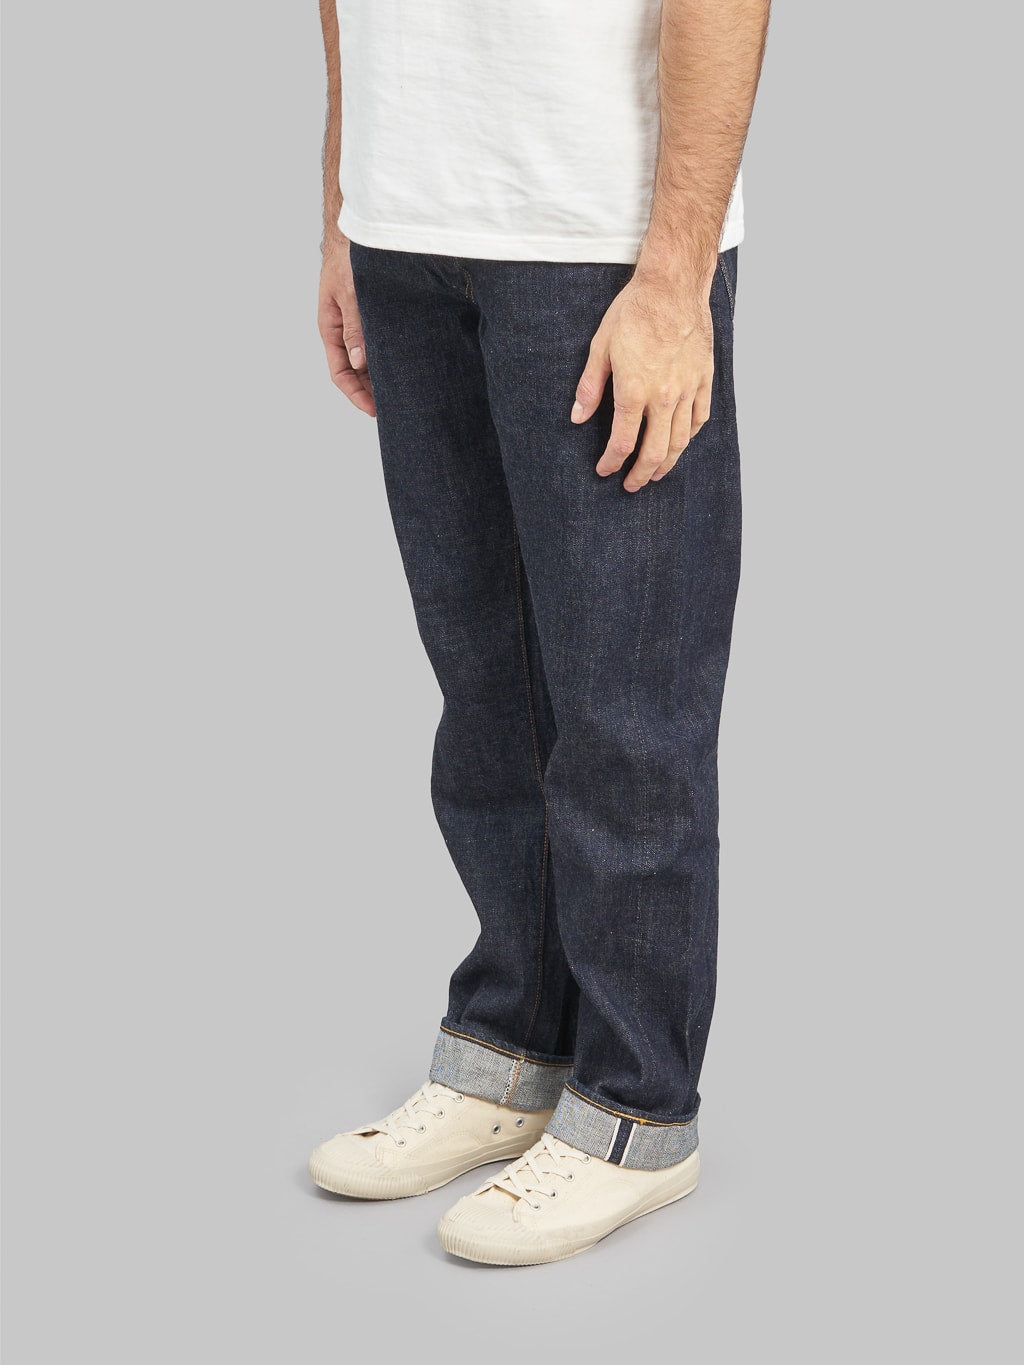 fullcount 1103 clean straight selvedge denim jeans side fit